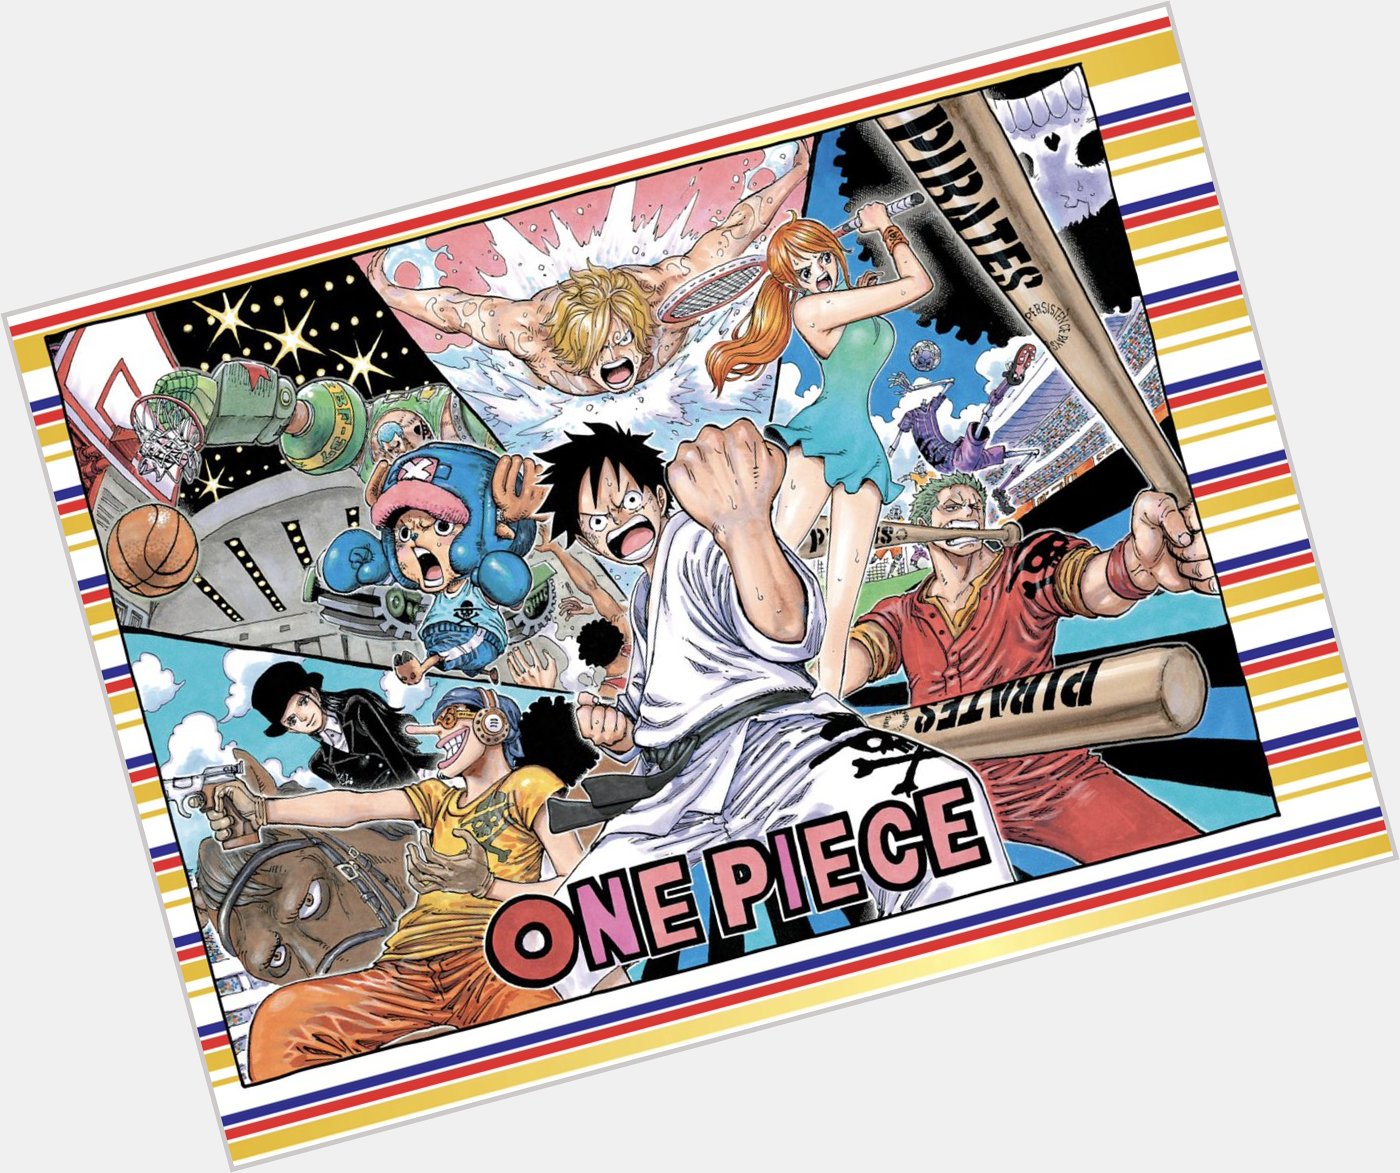 Happy 44th Birthday to the creator of One Piece, Eiichiro Oda! 